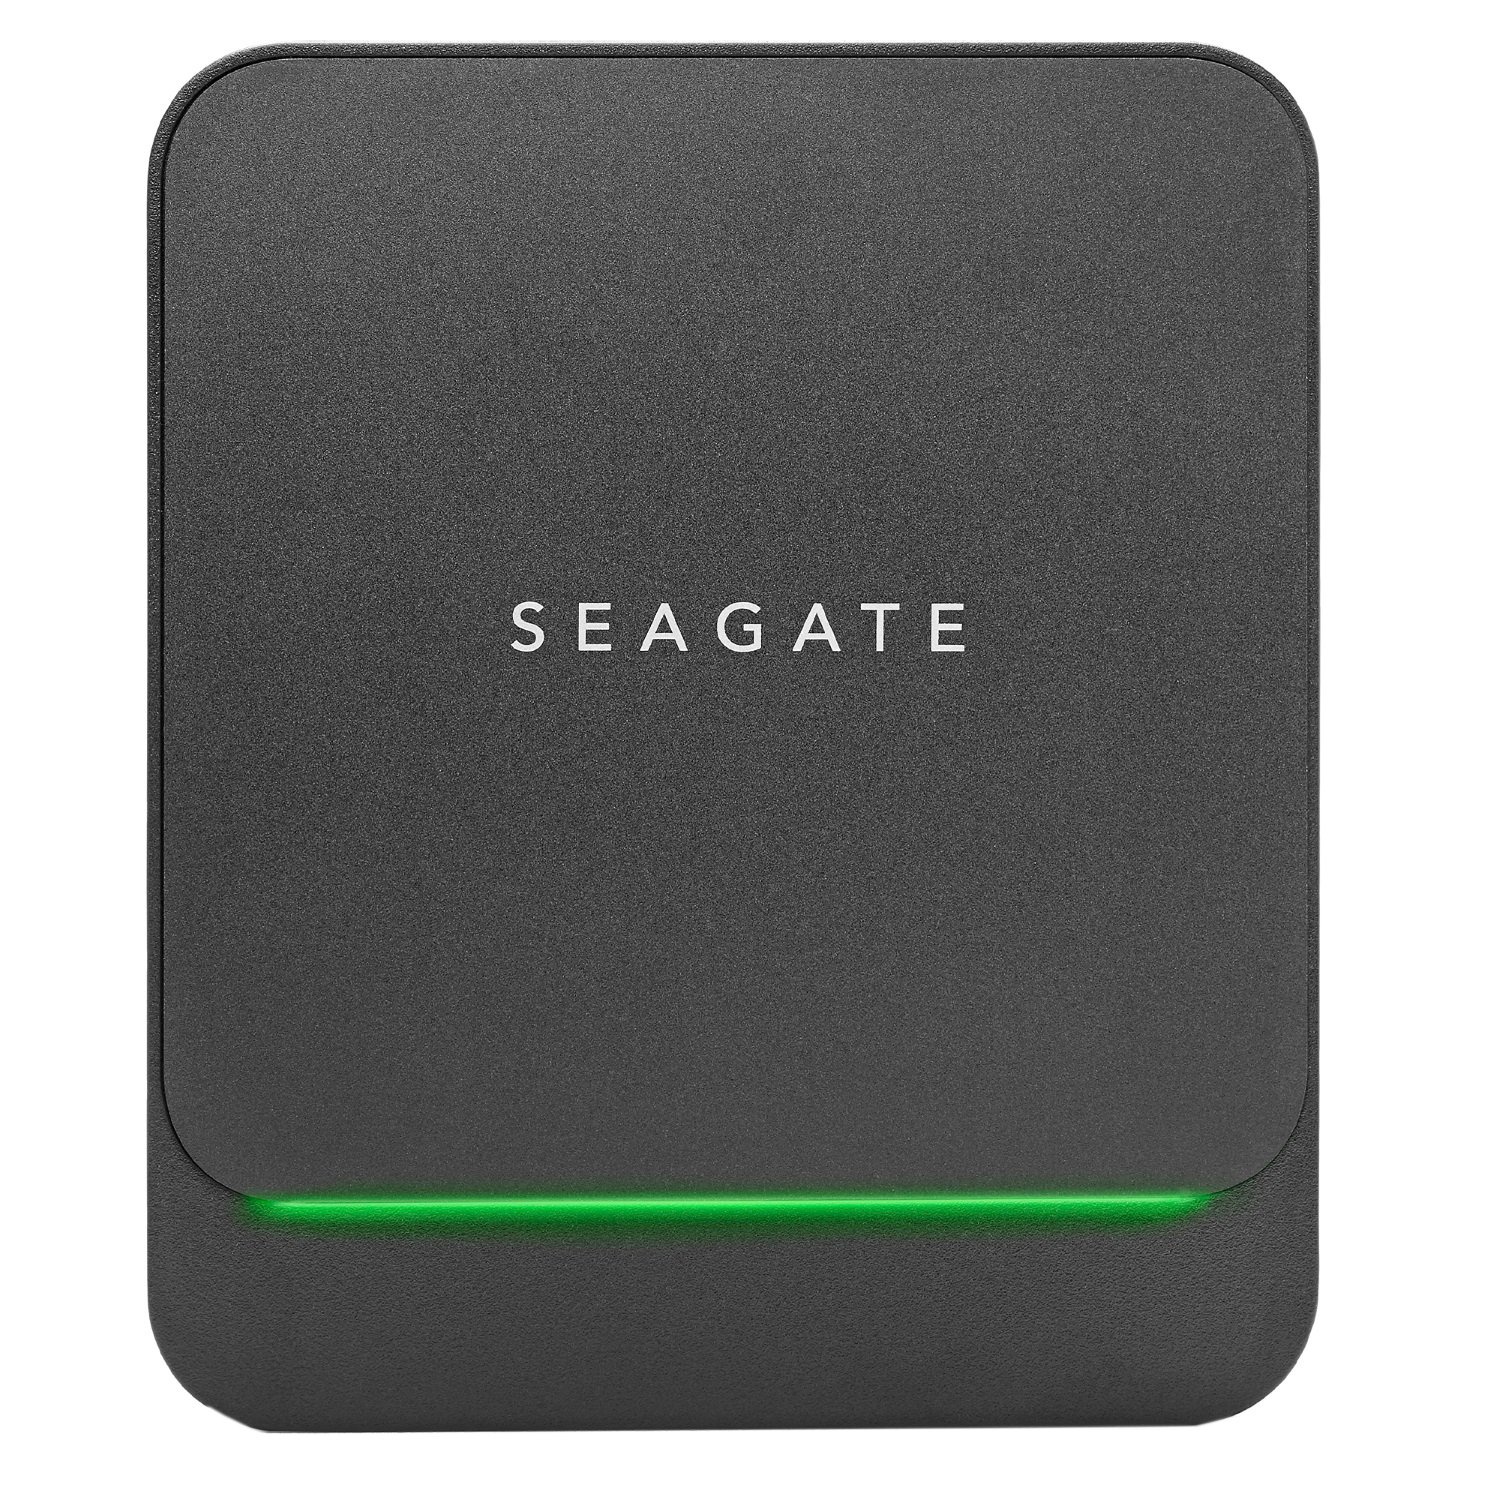 Seagate Barracuda 1TB Portable SSD Hard Drive Review